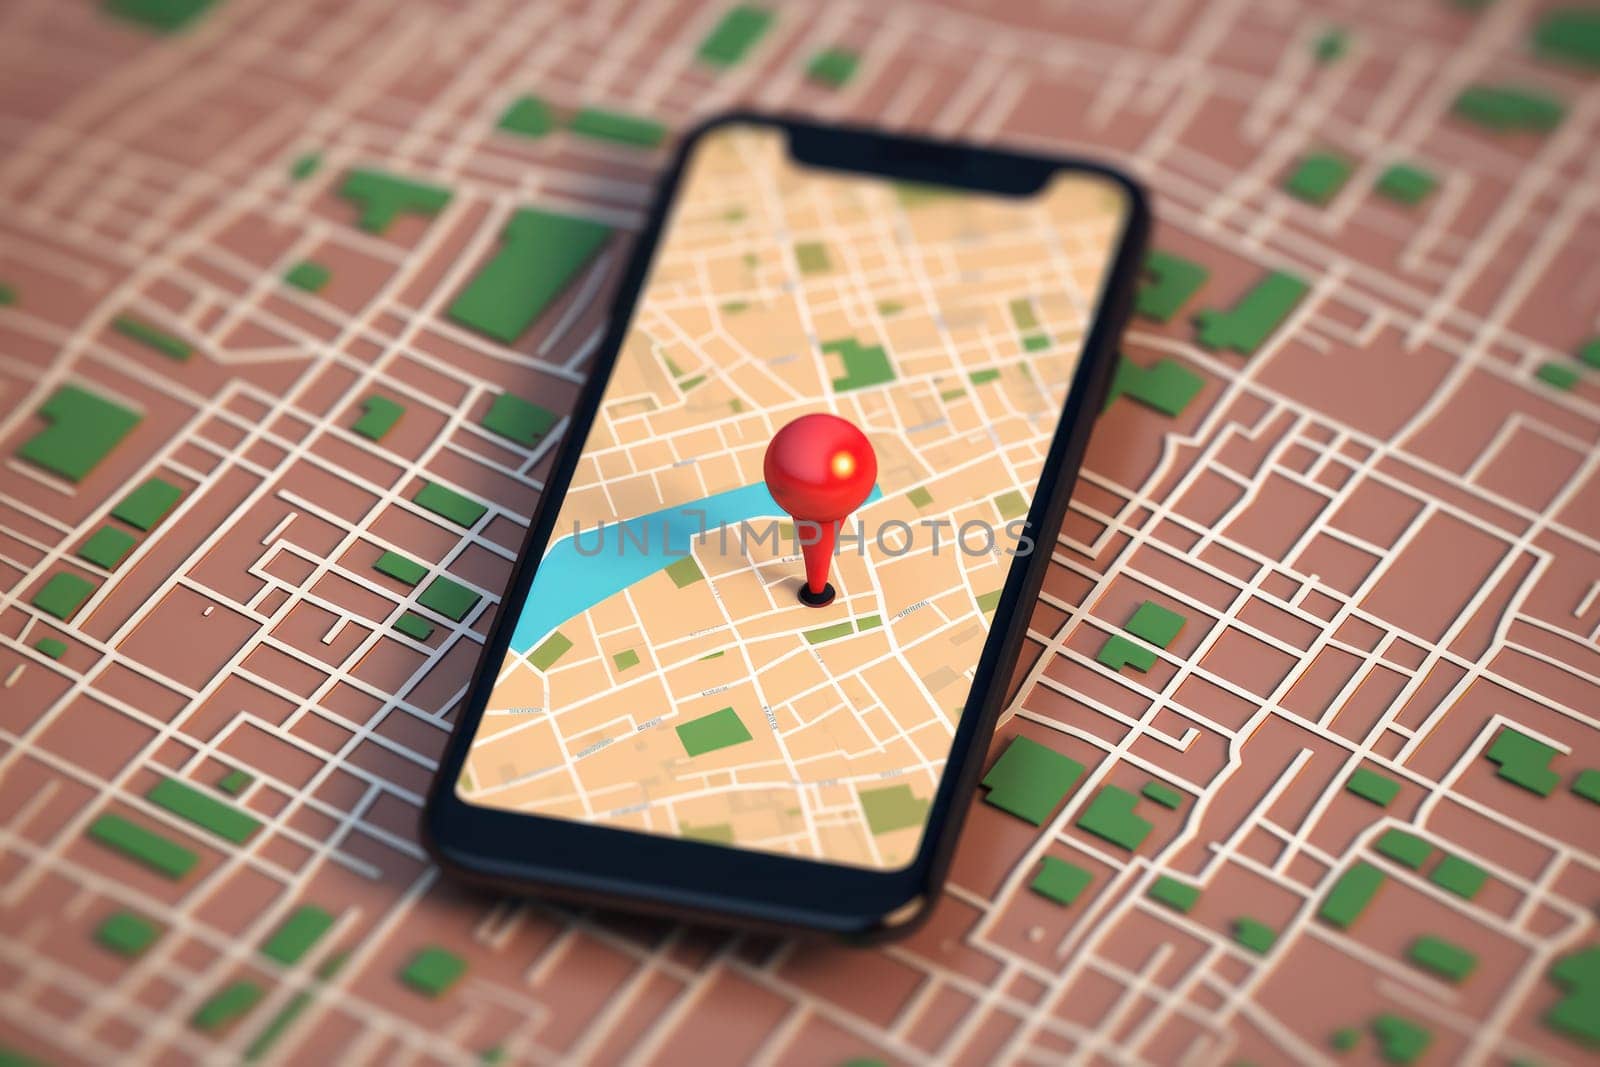 Isometric location track app on touchscreen smartphone.